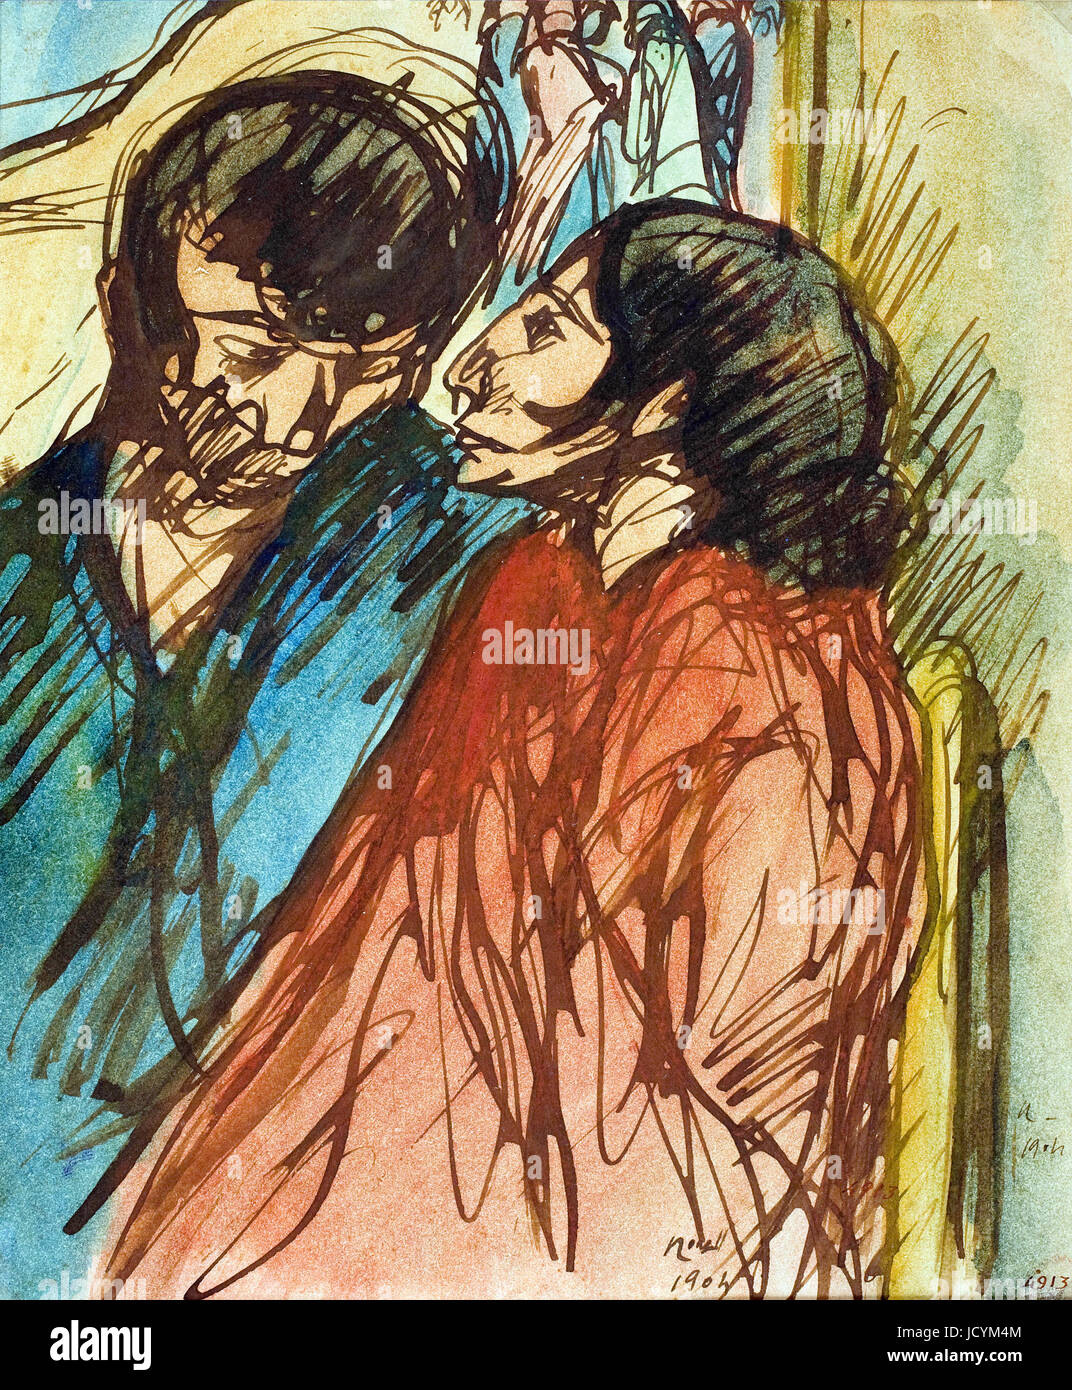 Isidre Nonell, Gypsy Woman 1904 Dessin, Crayon et aquarelle sur papier. Museu Nacional d'Art de Catalunya, Barcelone, Espagne. Banque D'Images